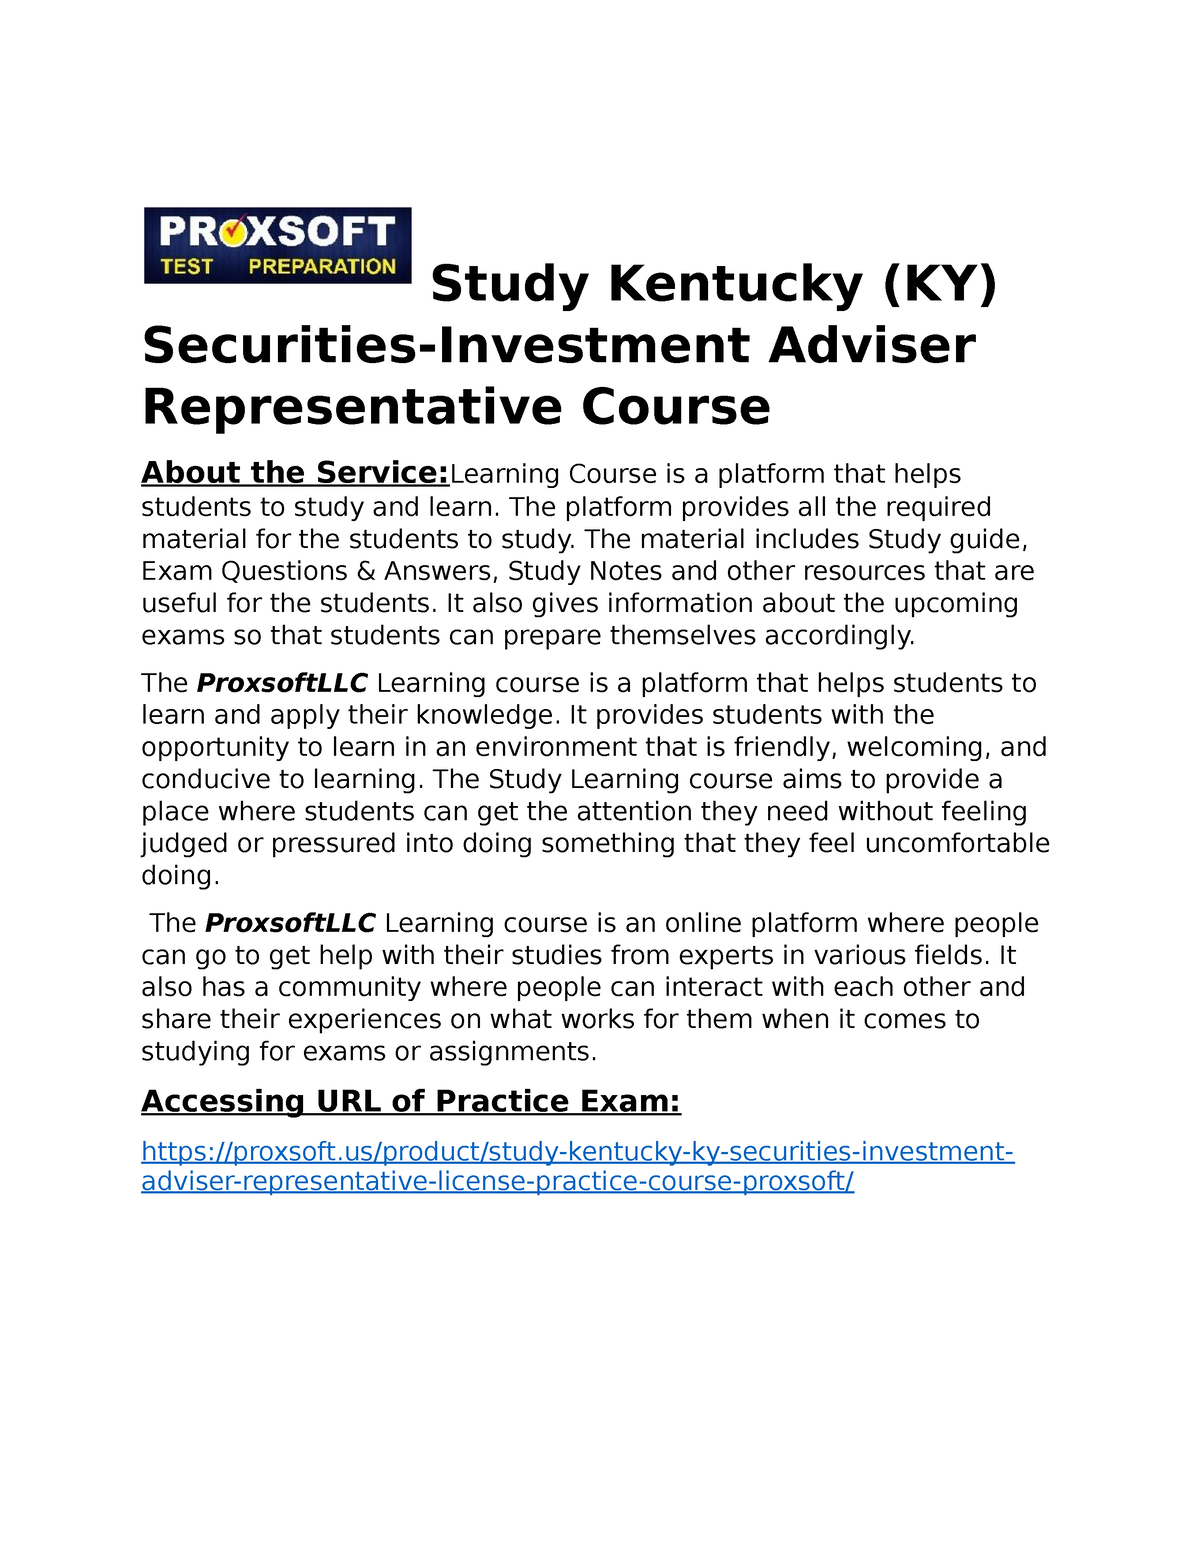 Study Kentucky (KY) Securities Investment Adviser Representative Course